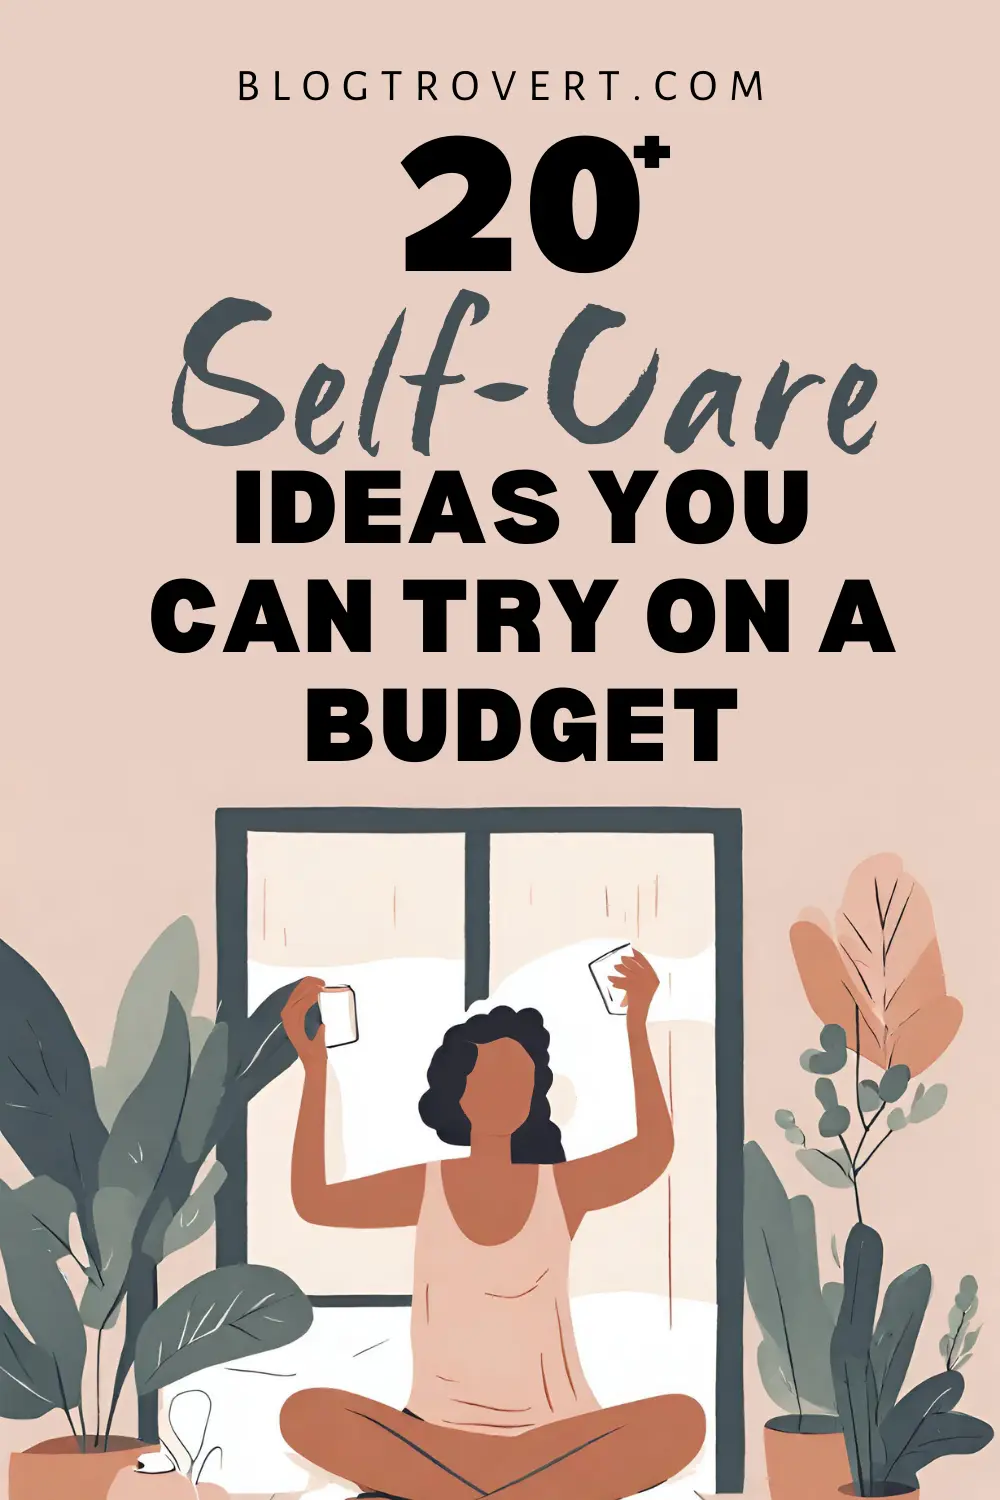 Self-care on a budget